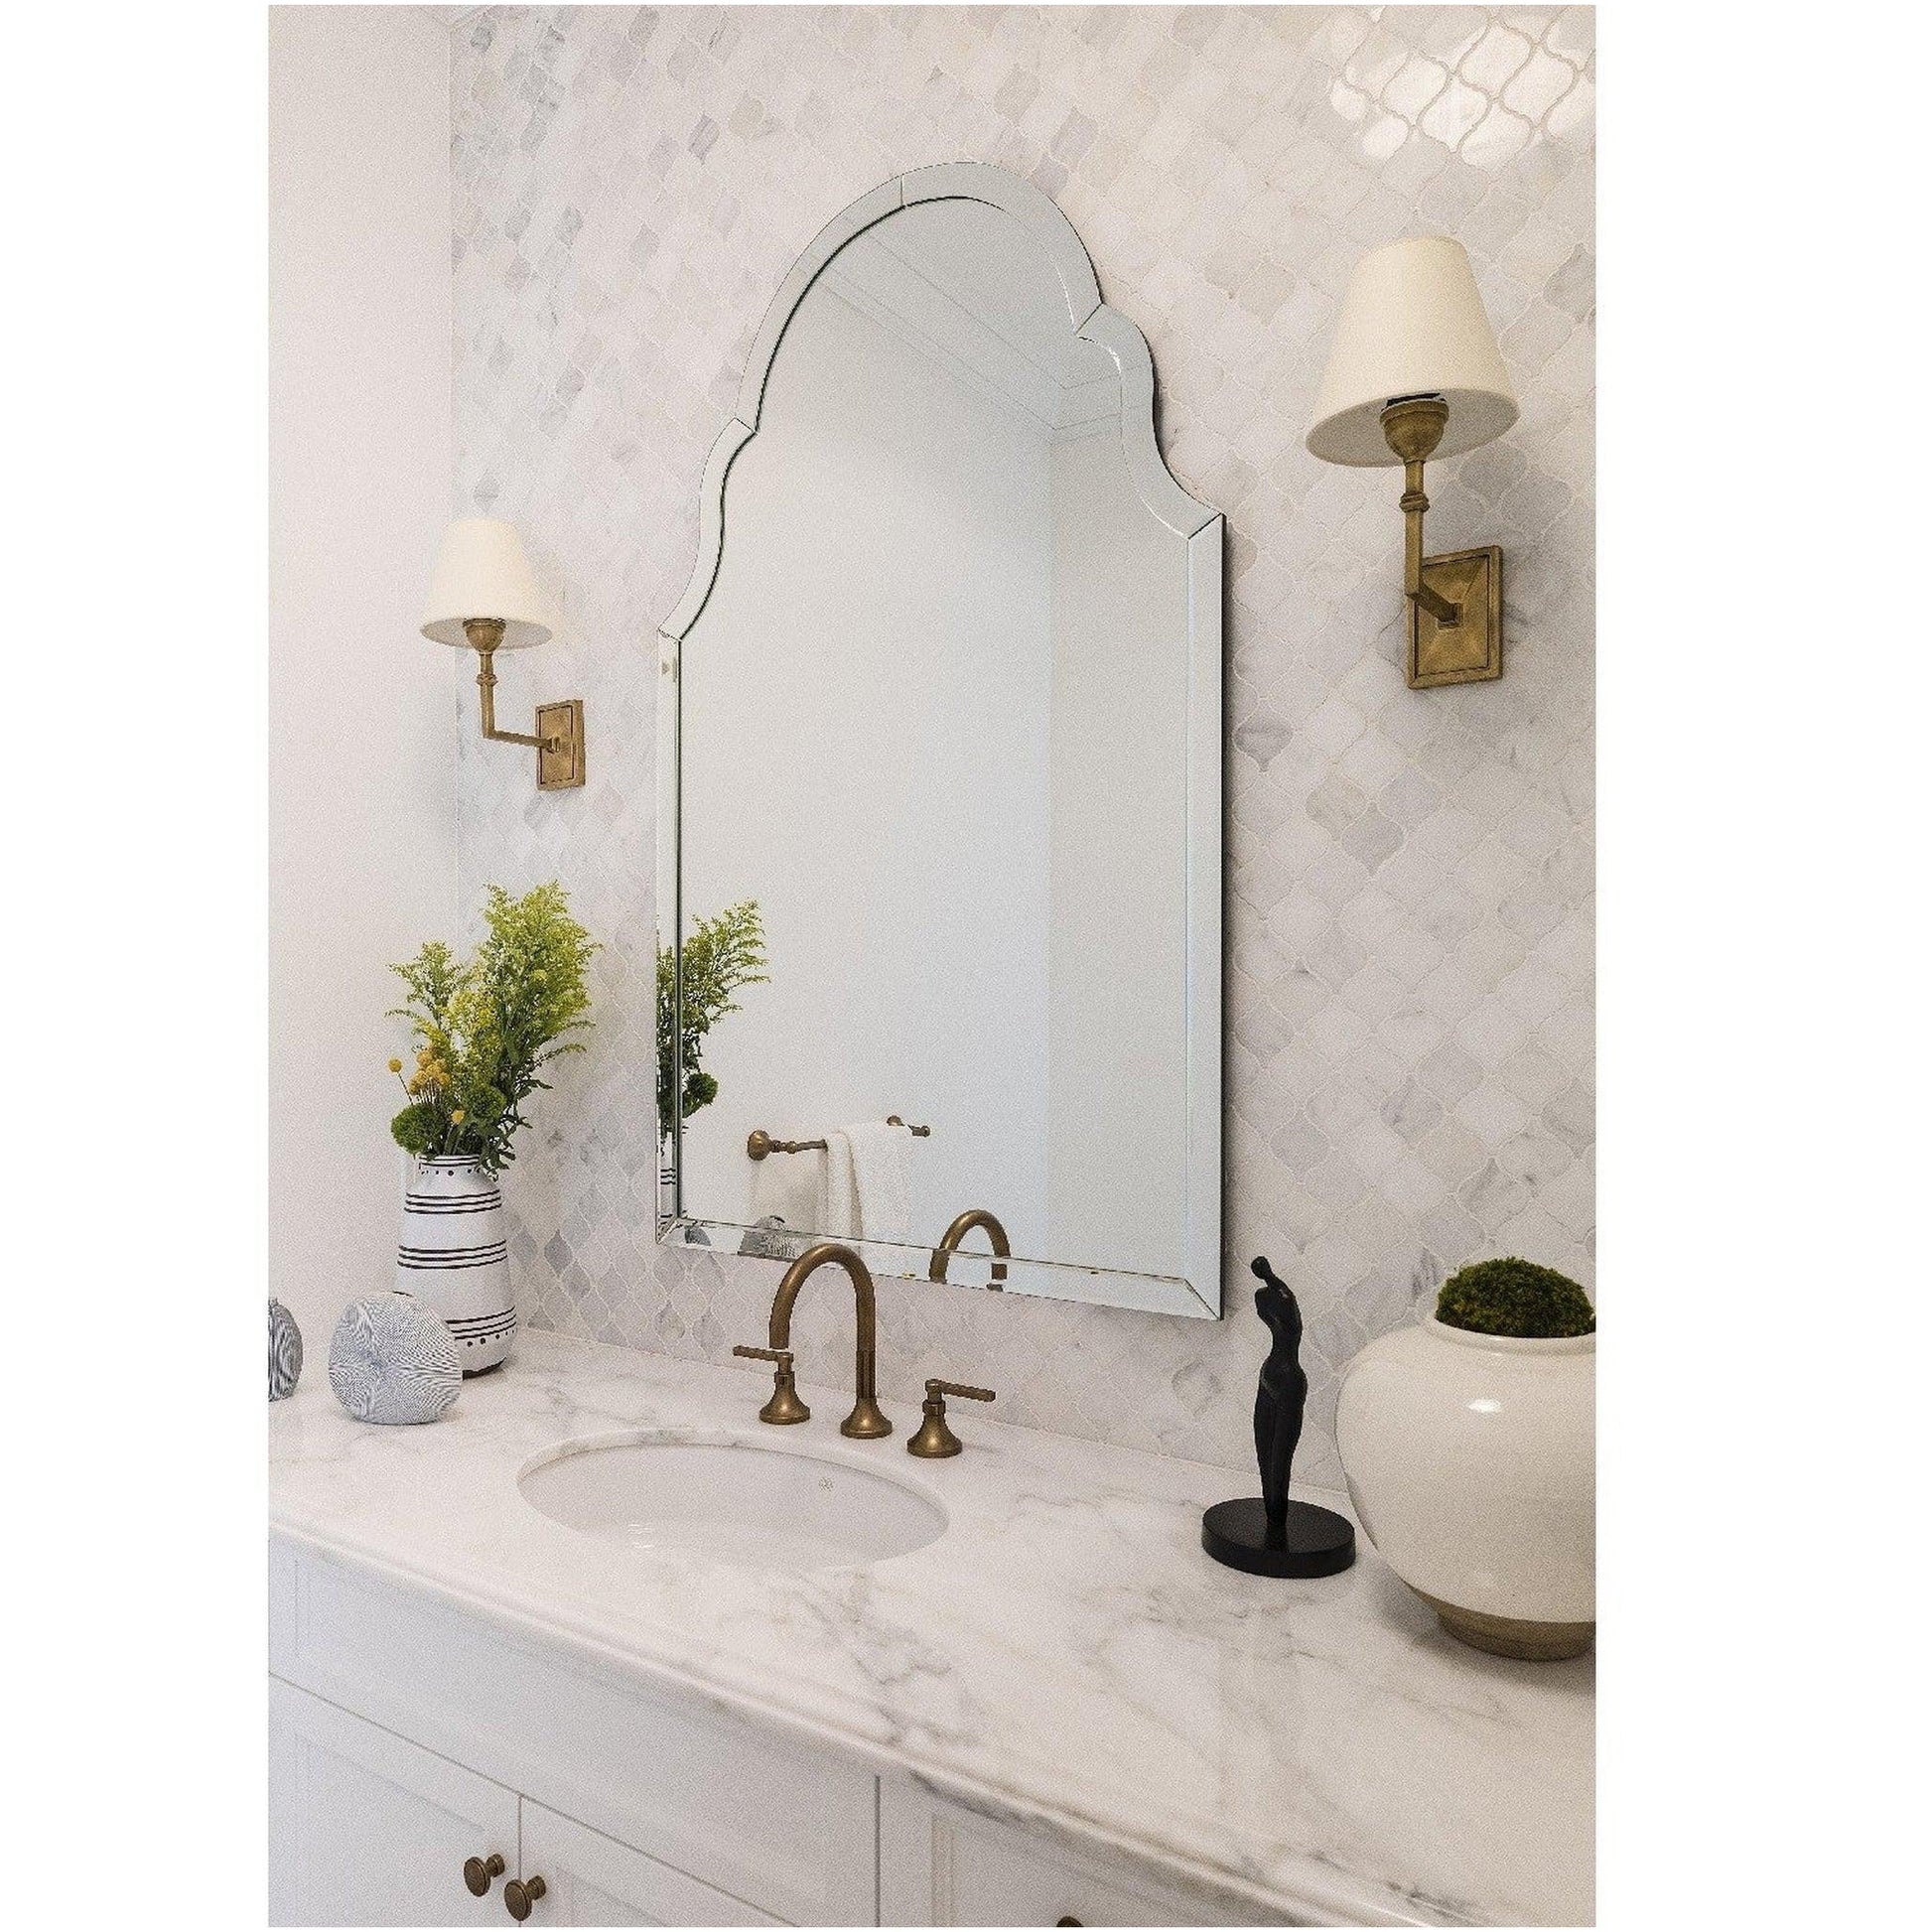 Mirror Home 32" x 52" Hand-Cut Mirror Framed Bathroom Mirror With Satin Black Wood Backing